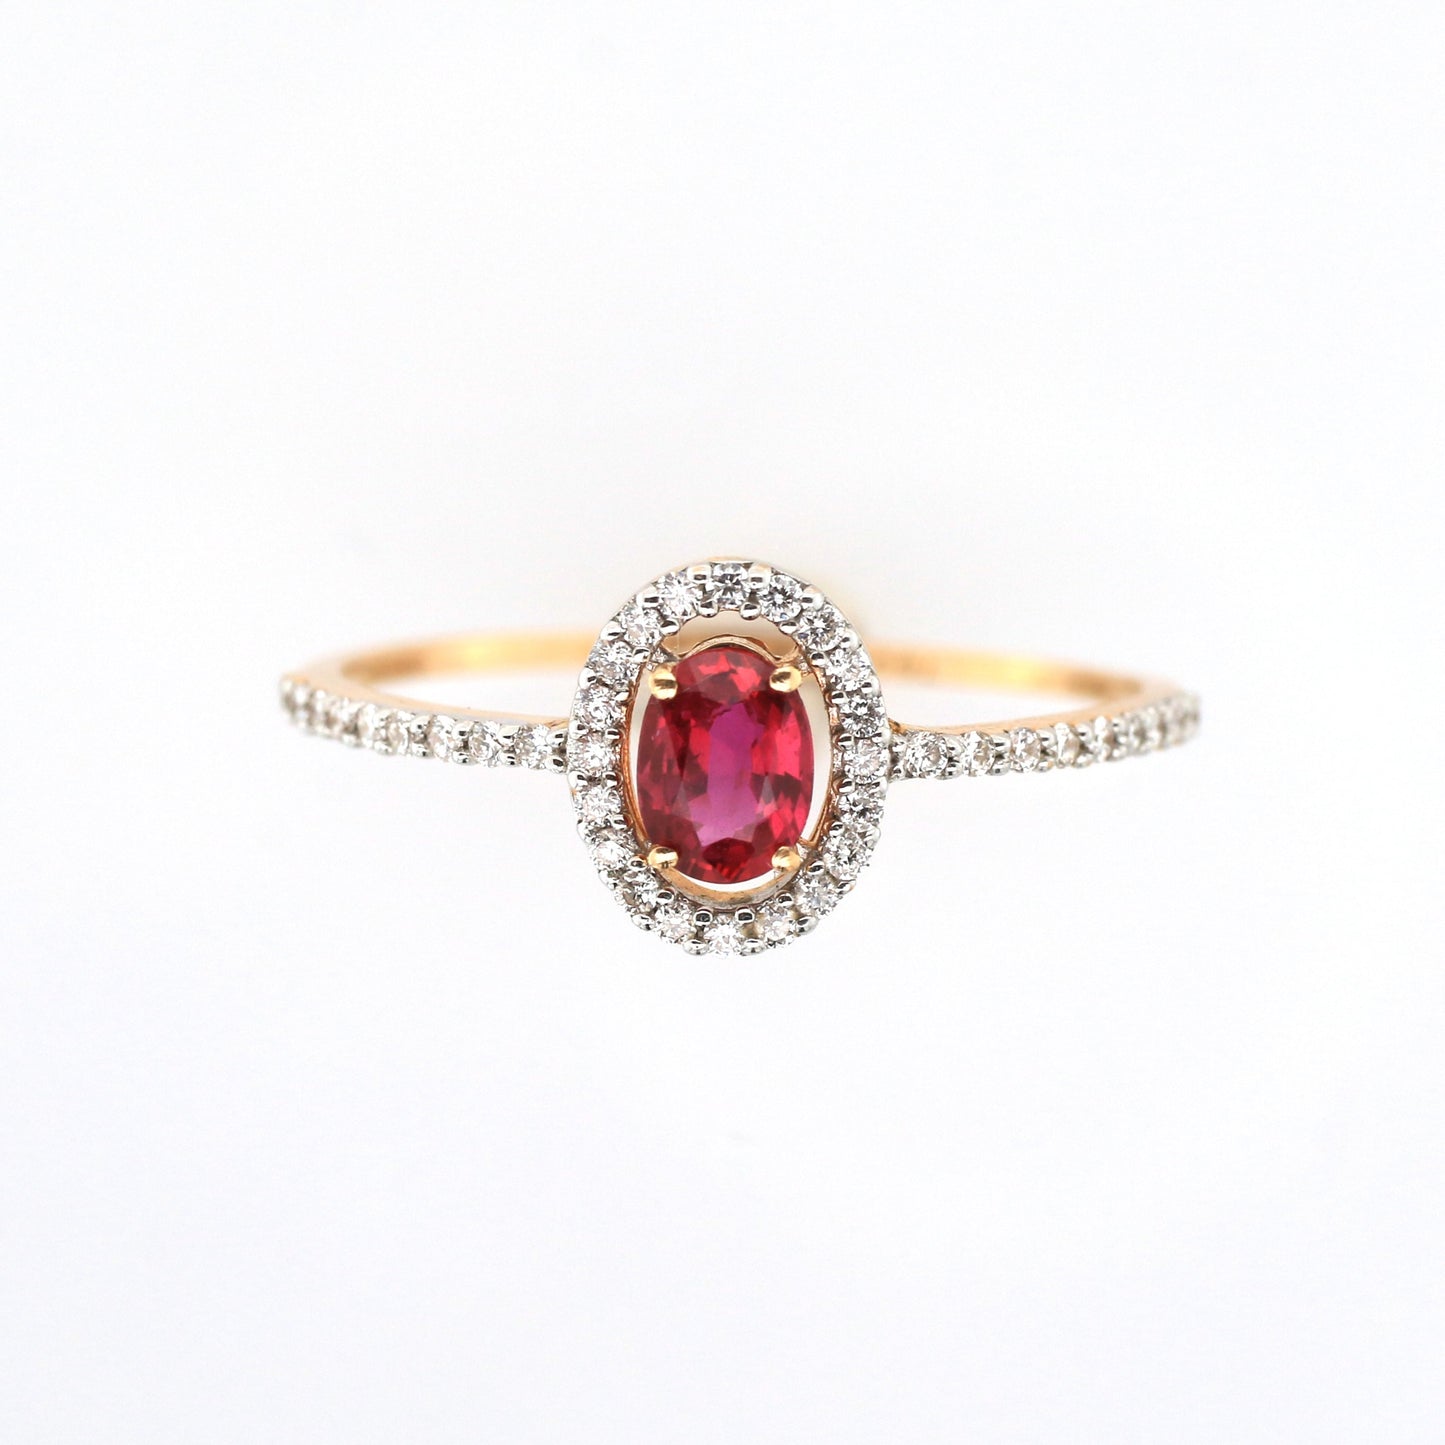 Vintage Ruby Ring - 18K Pink Gold 1.119